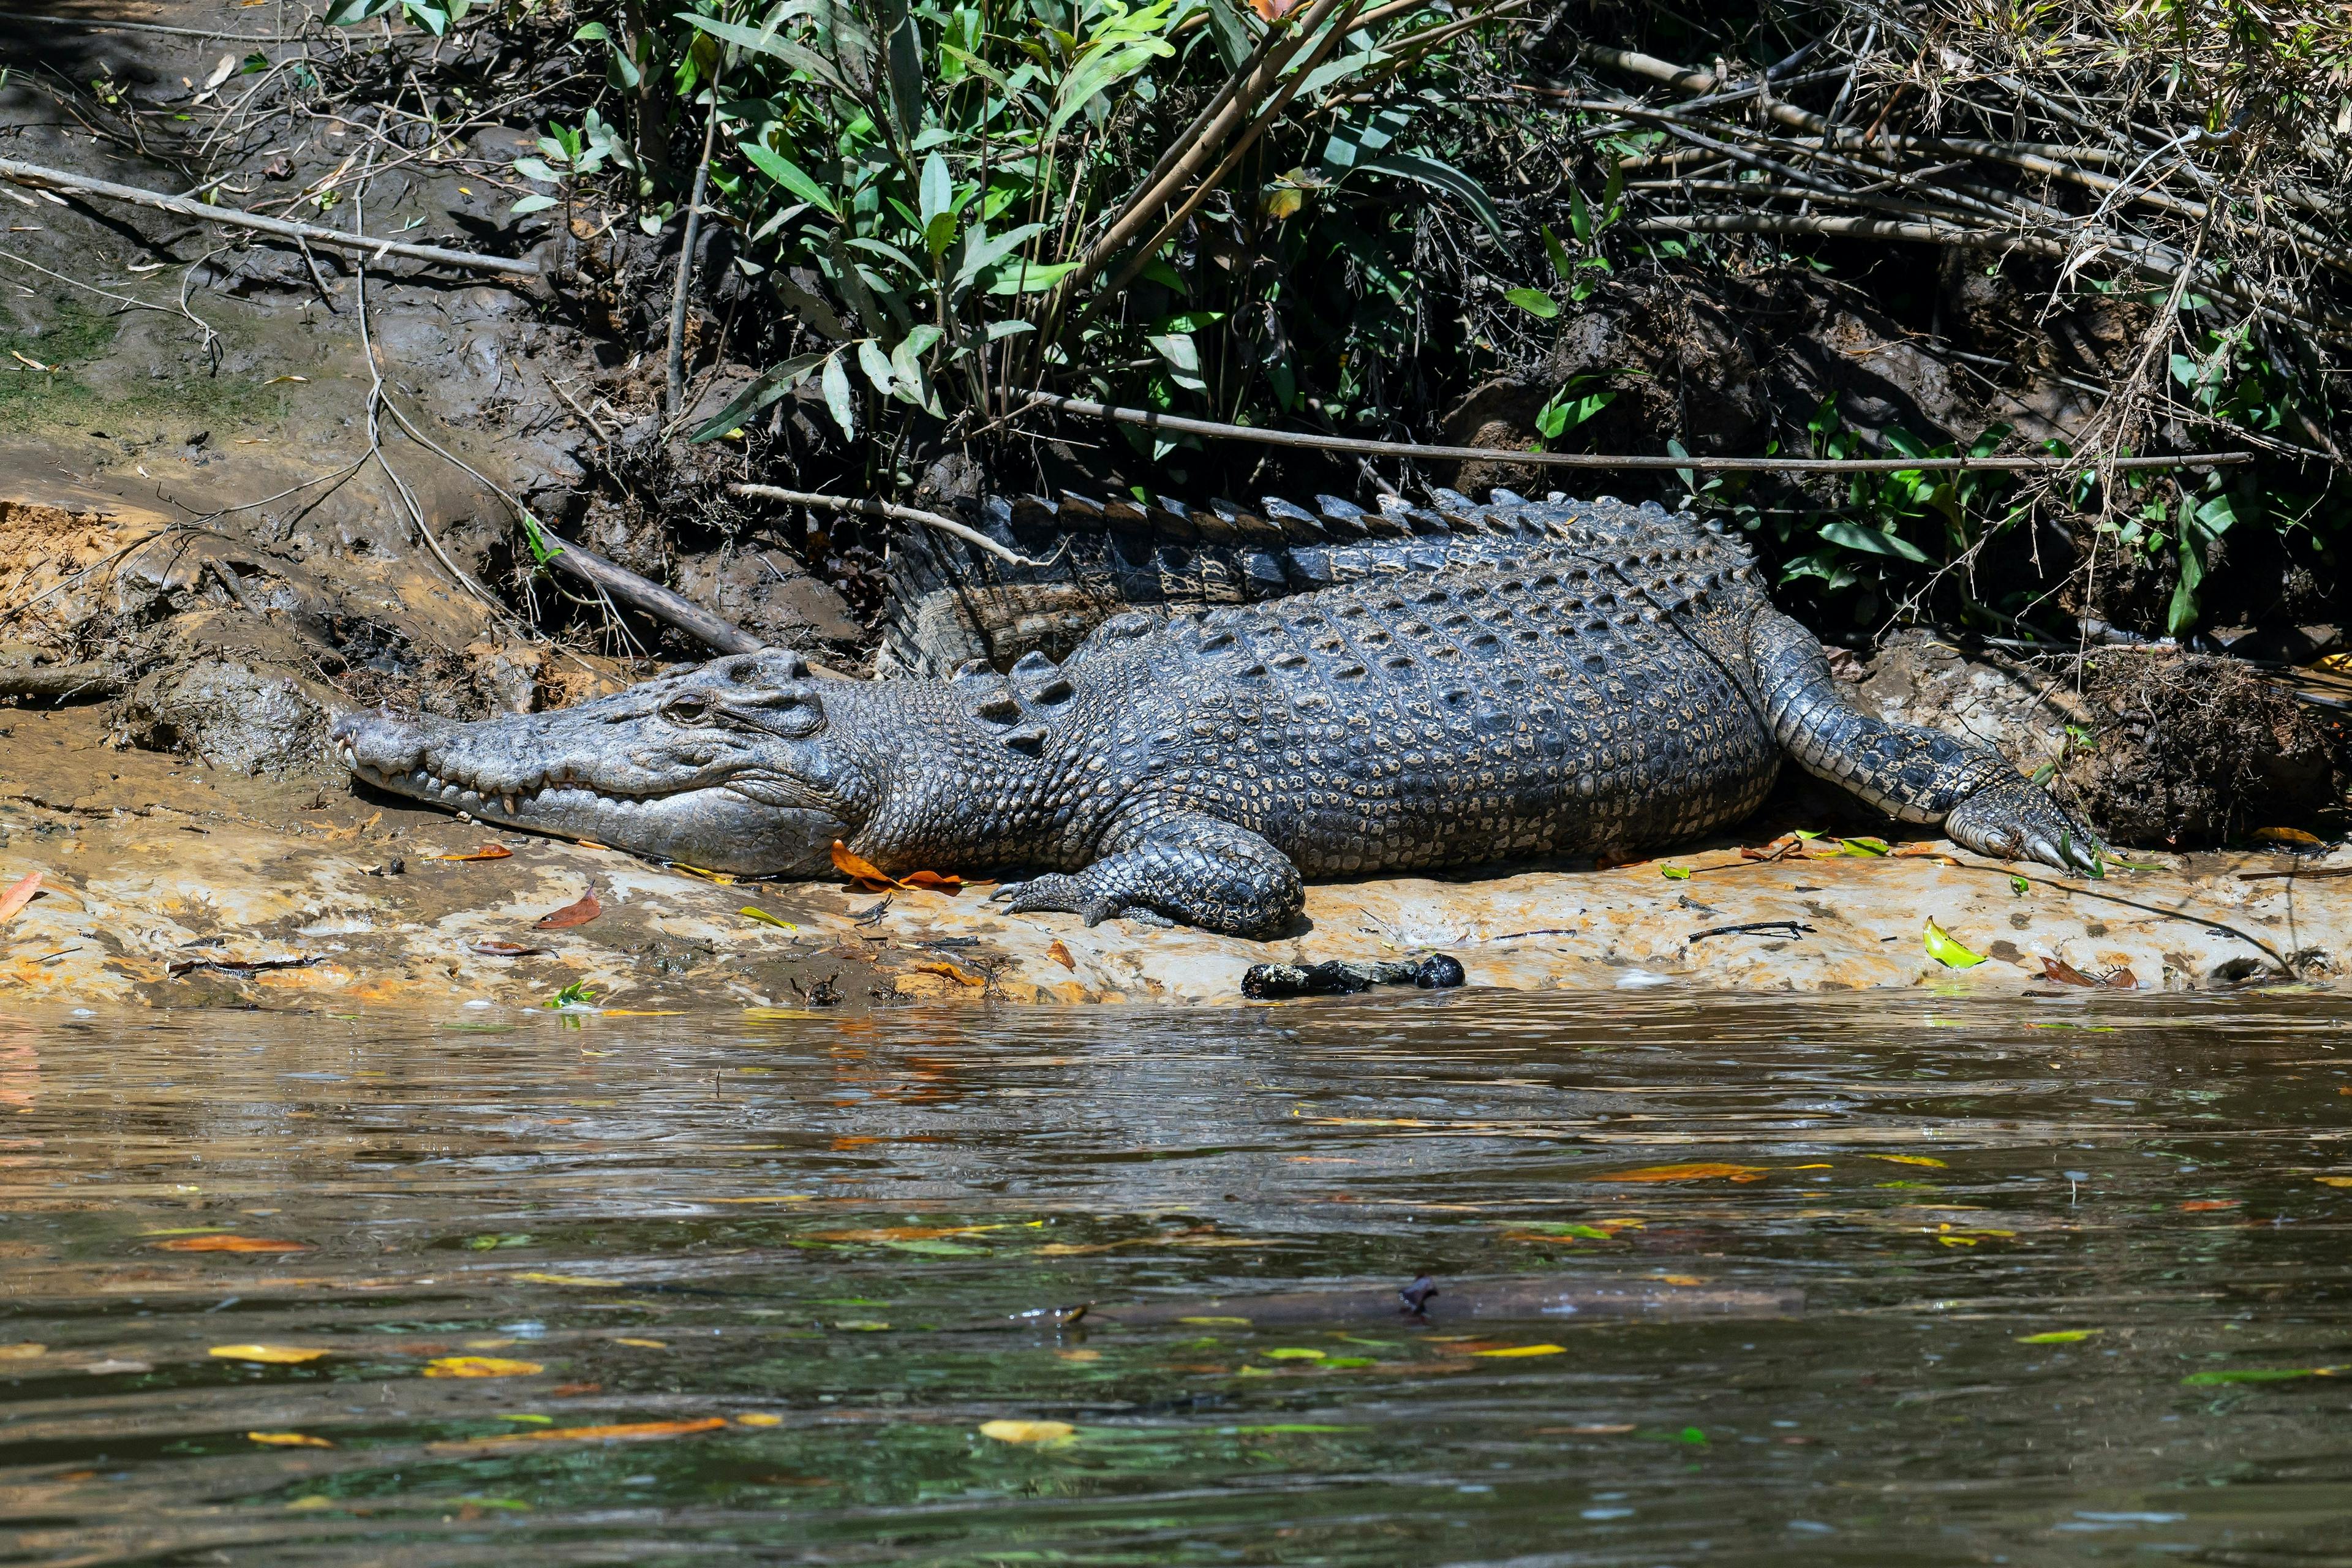 Crocodile in Daintree National Park in Australia.